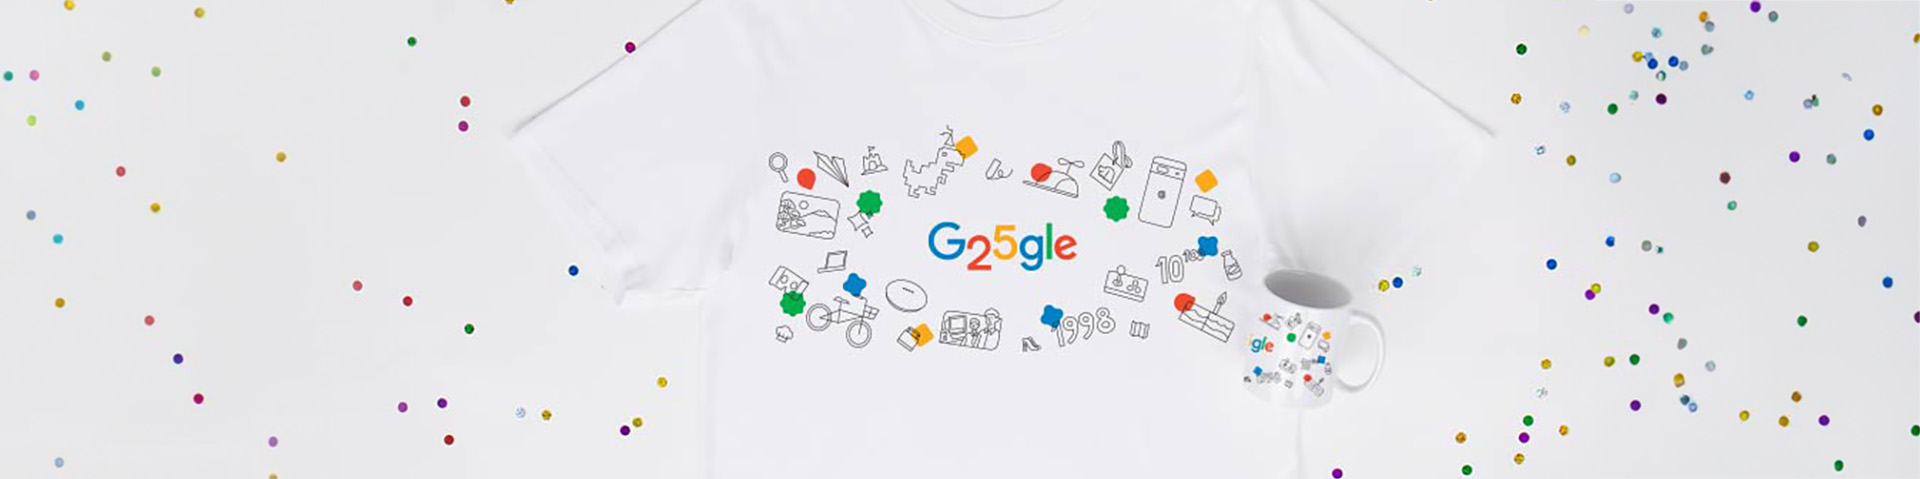 Google's 25th Birthday - Google Merchandise Store